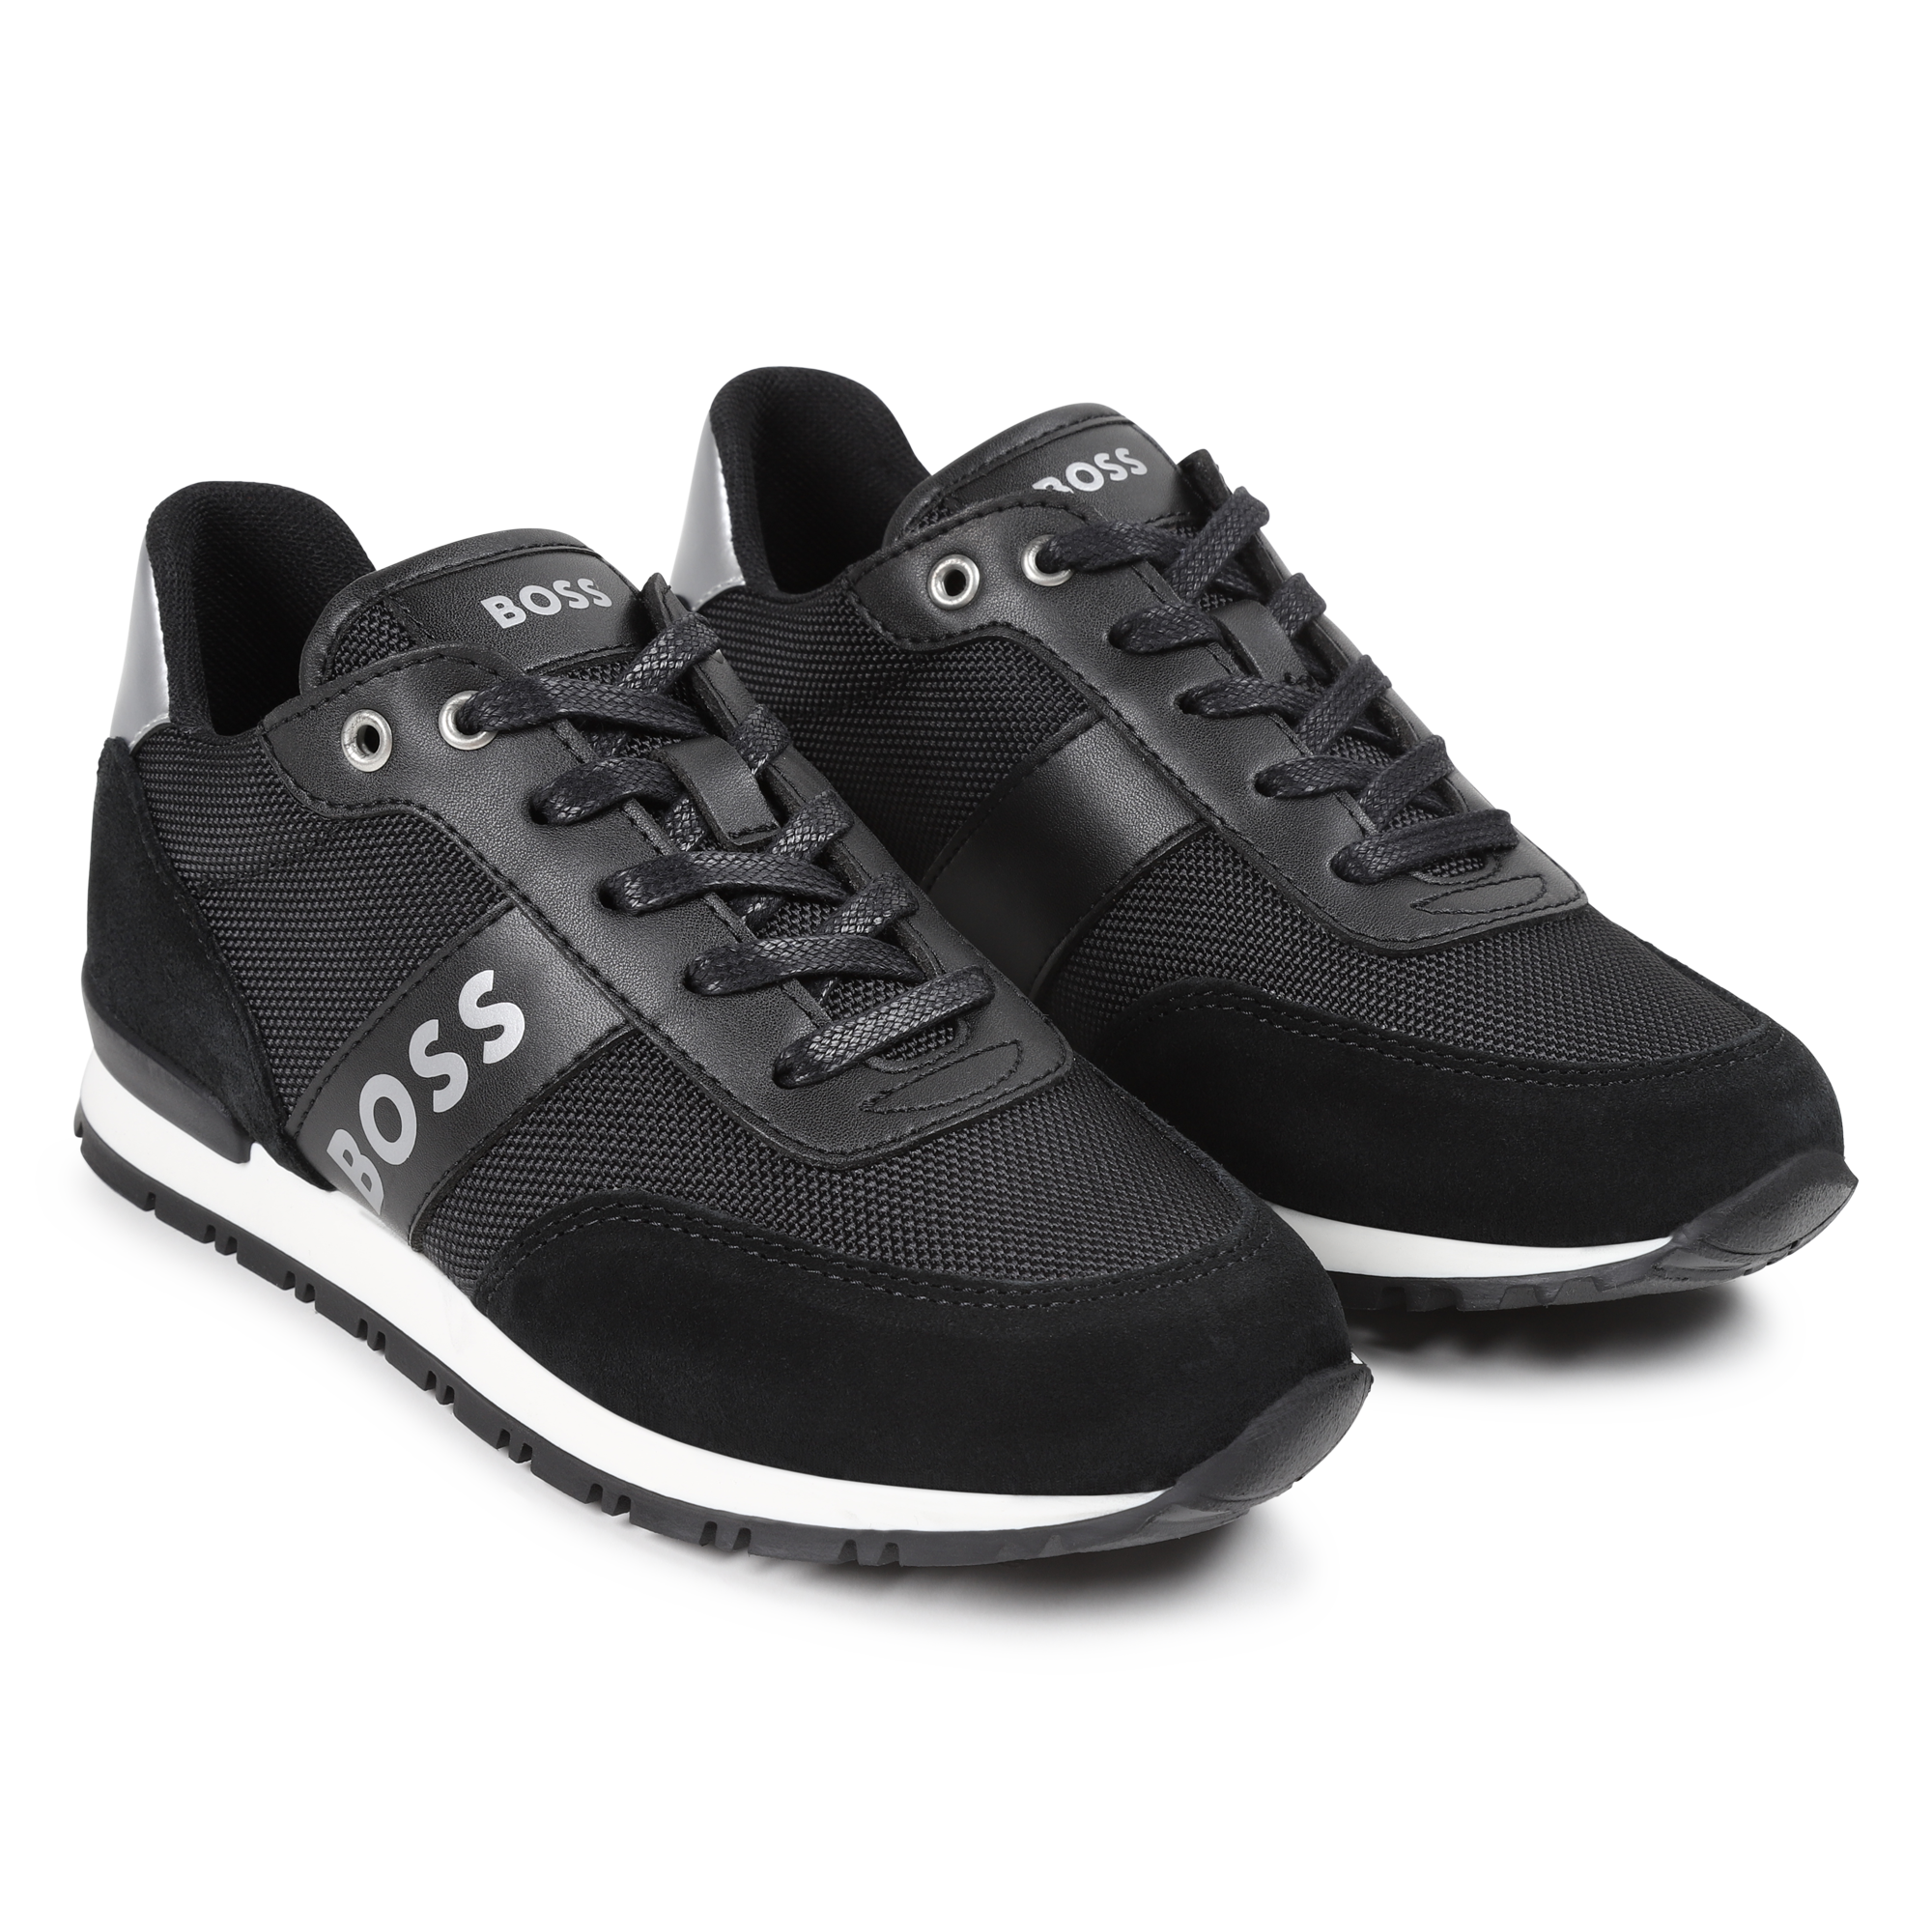 BOSS Kidswear logo-print touch-strap leather sneakers - White